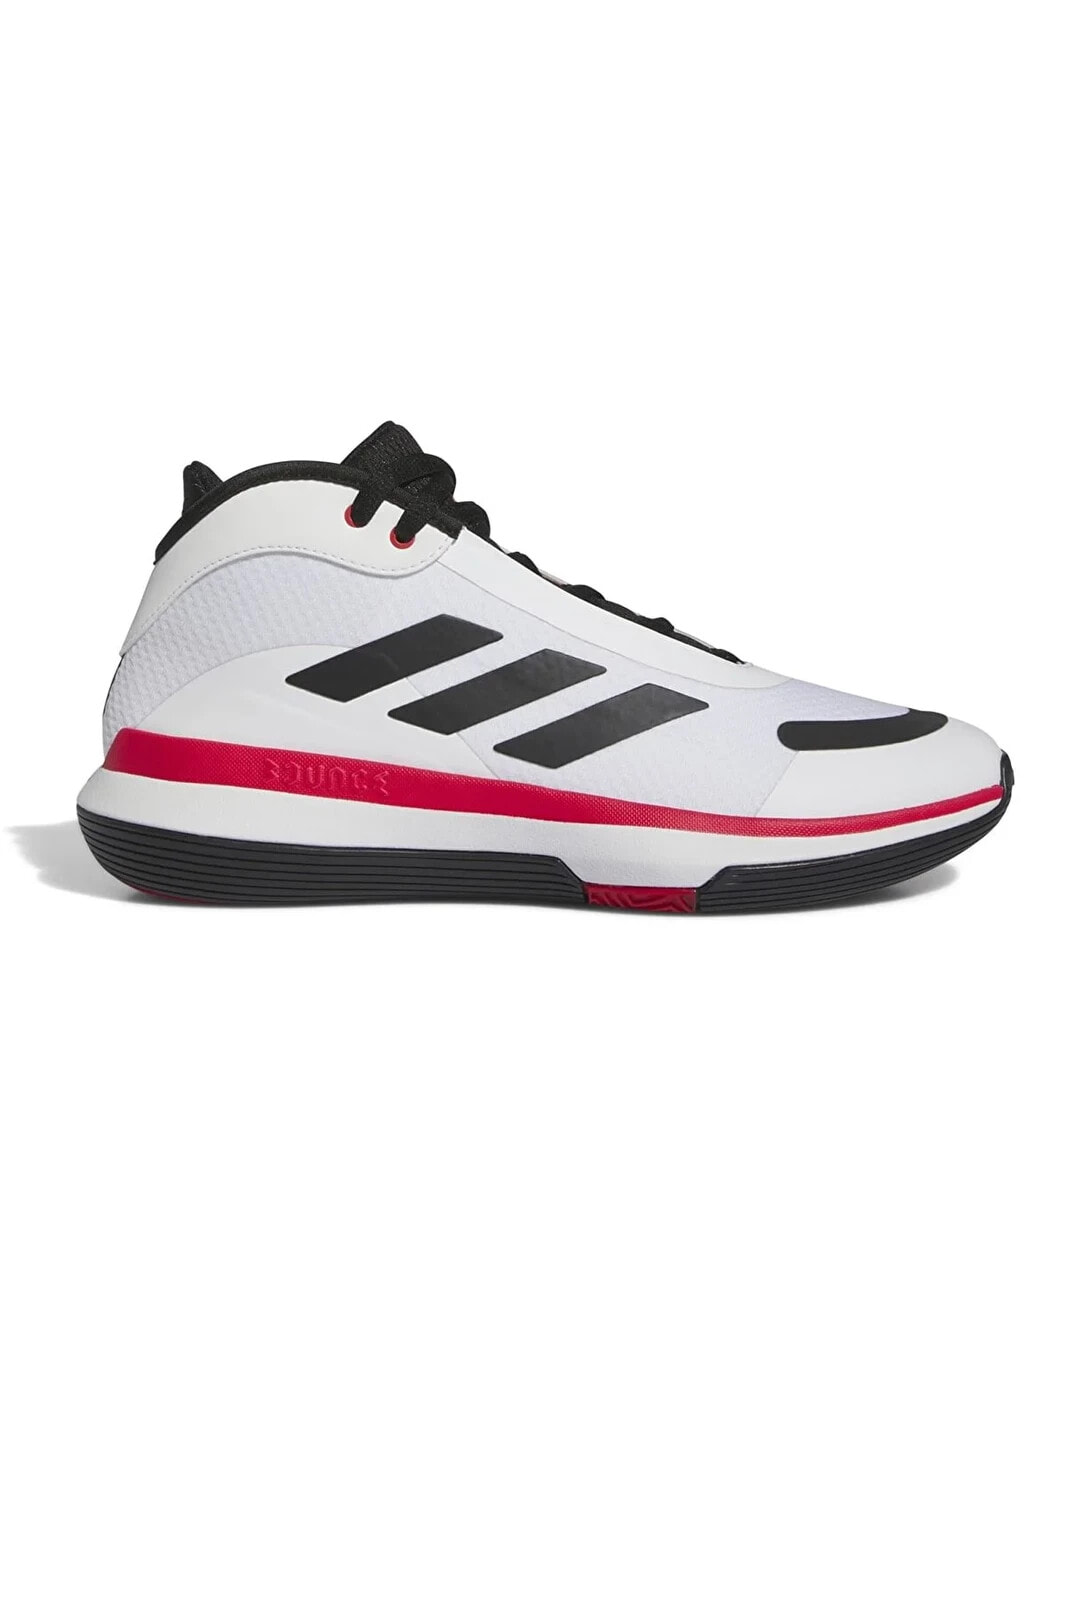 IE9277-E adidas Bounce Legends Erkek Spor Ayakkabı Beyaz